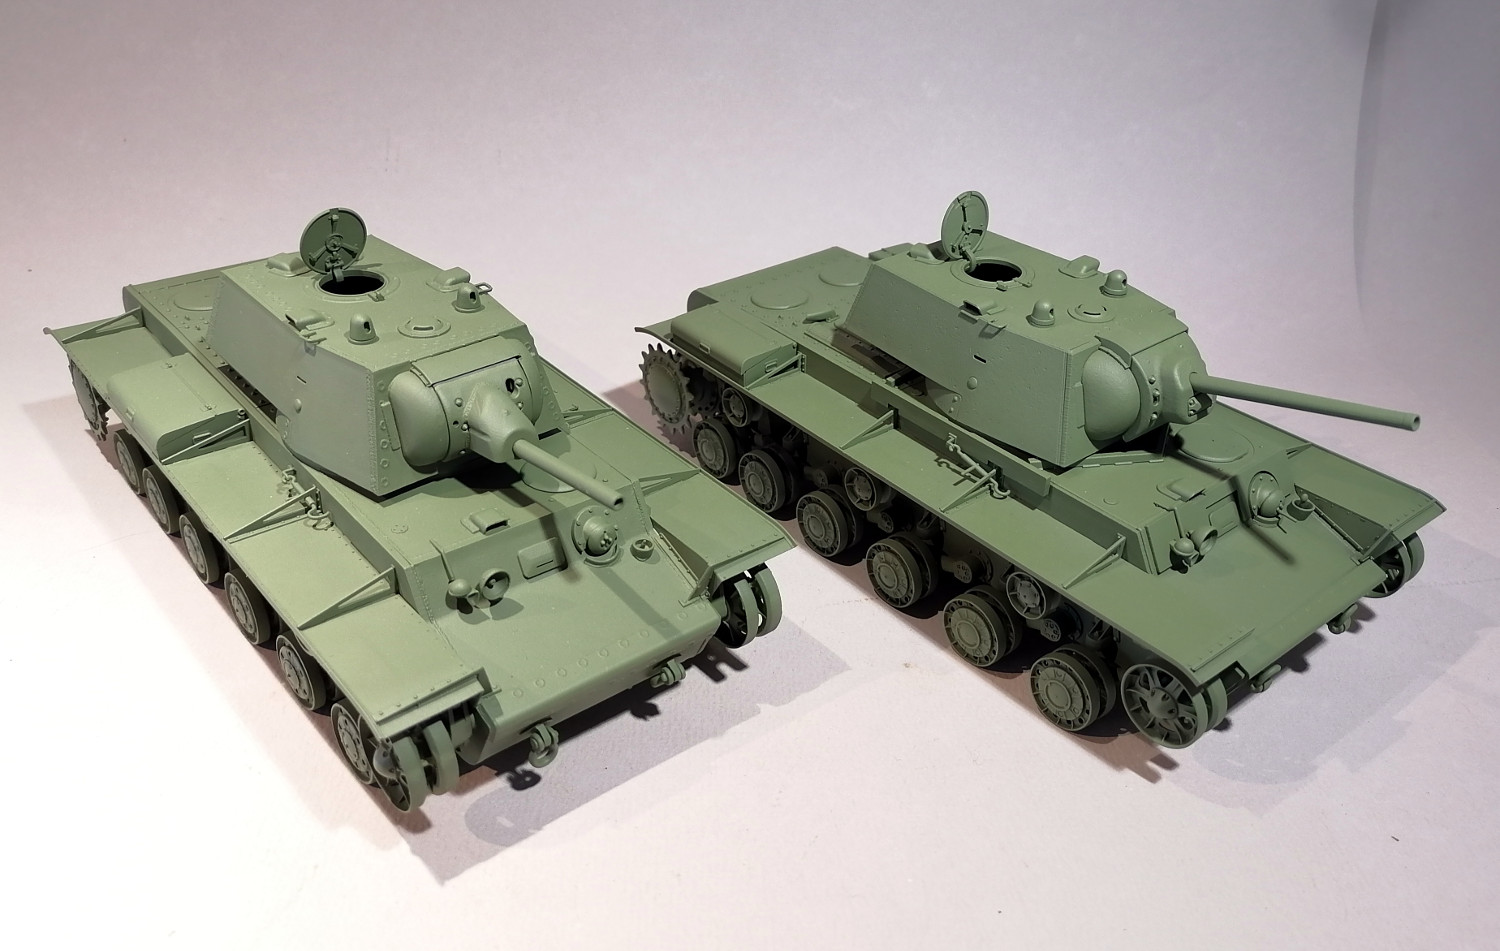 [TAMIYA - TRUMPETER] KV1 mod 41 précoce char lourd comparatif montage  Réf 35372 et 00356 GmjGOb-Fini-Tam-Trump01